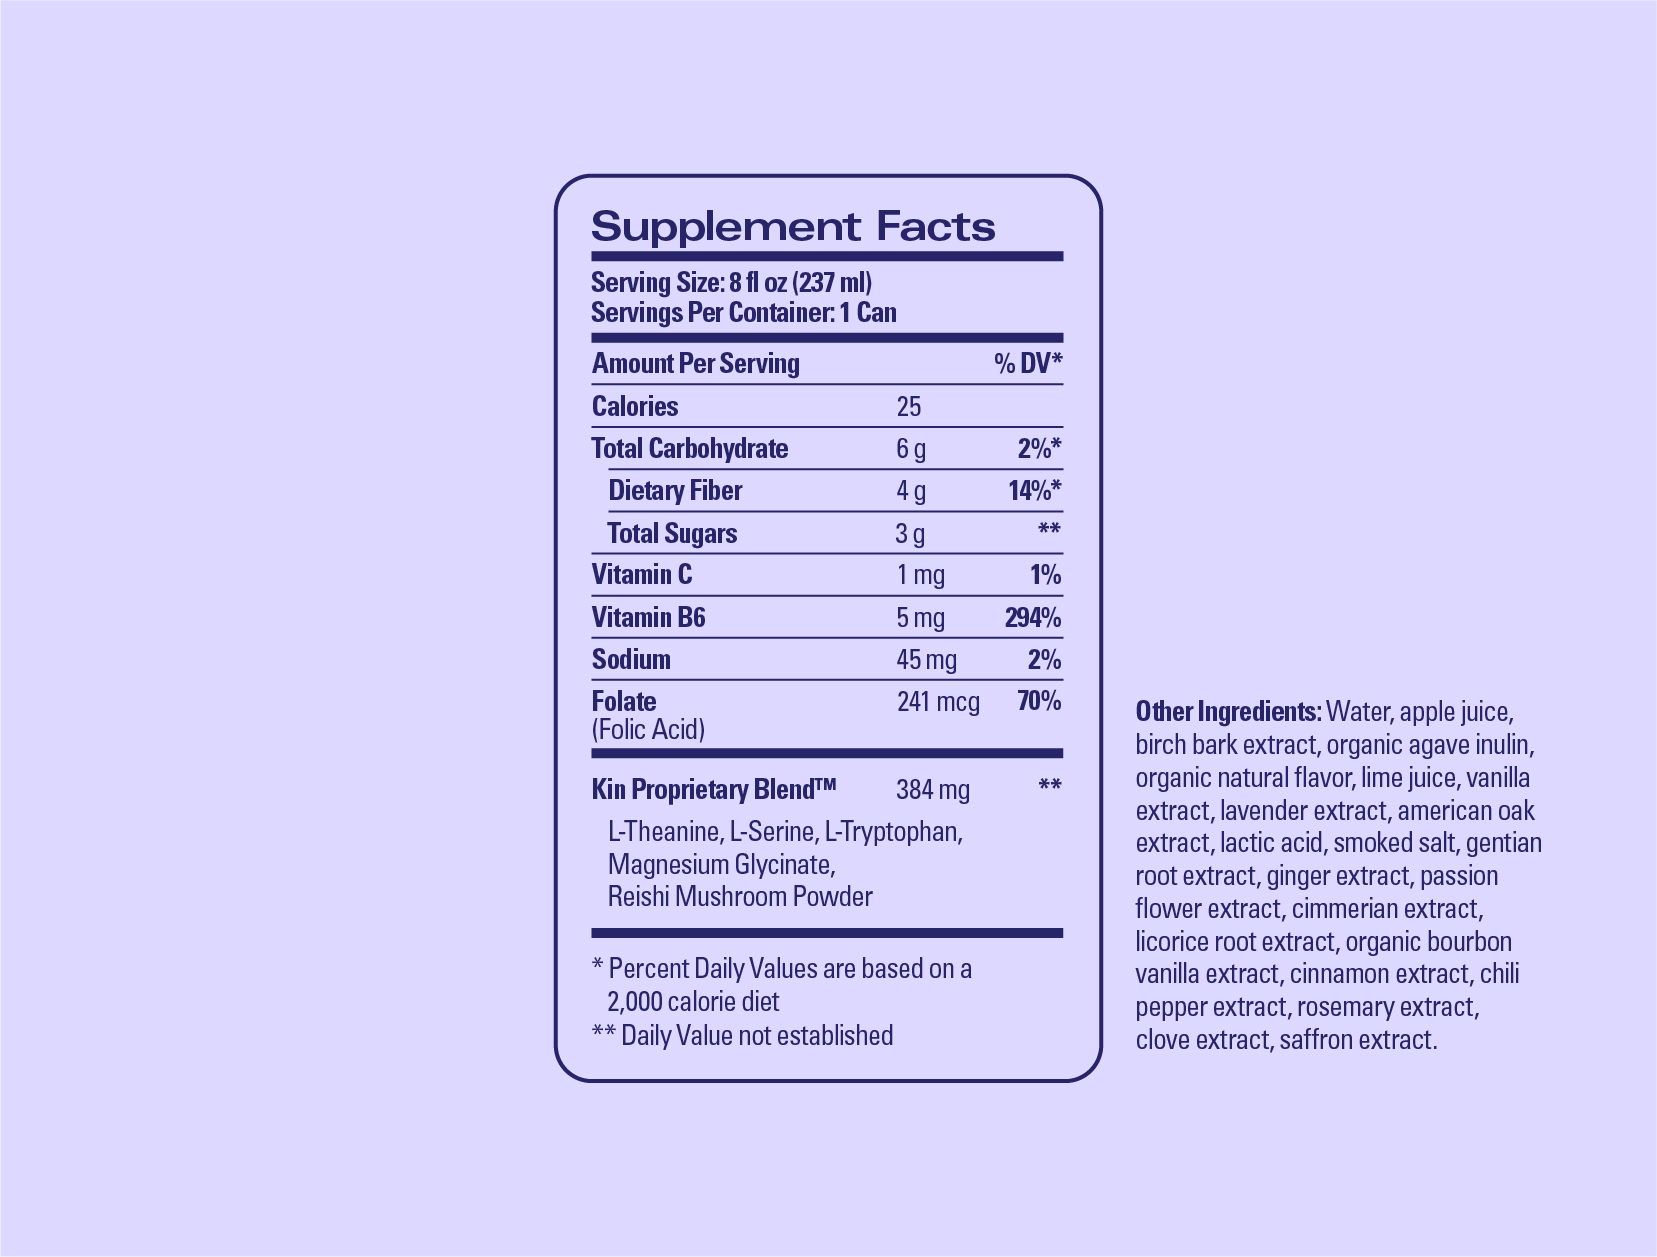 Nutrition Facts label panel for Kin Euphorics Lightwave